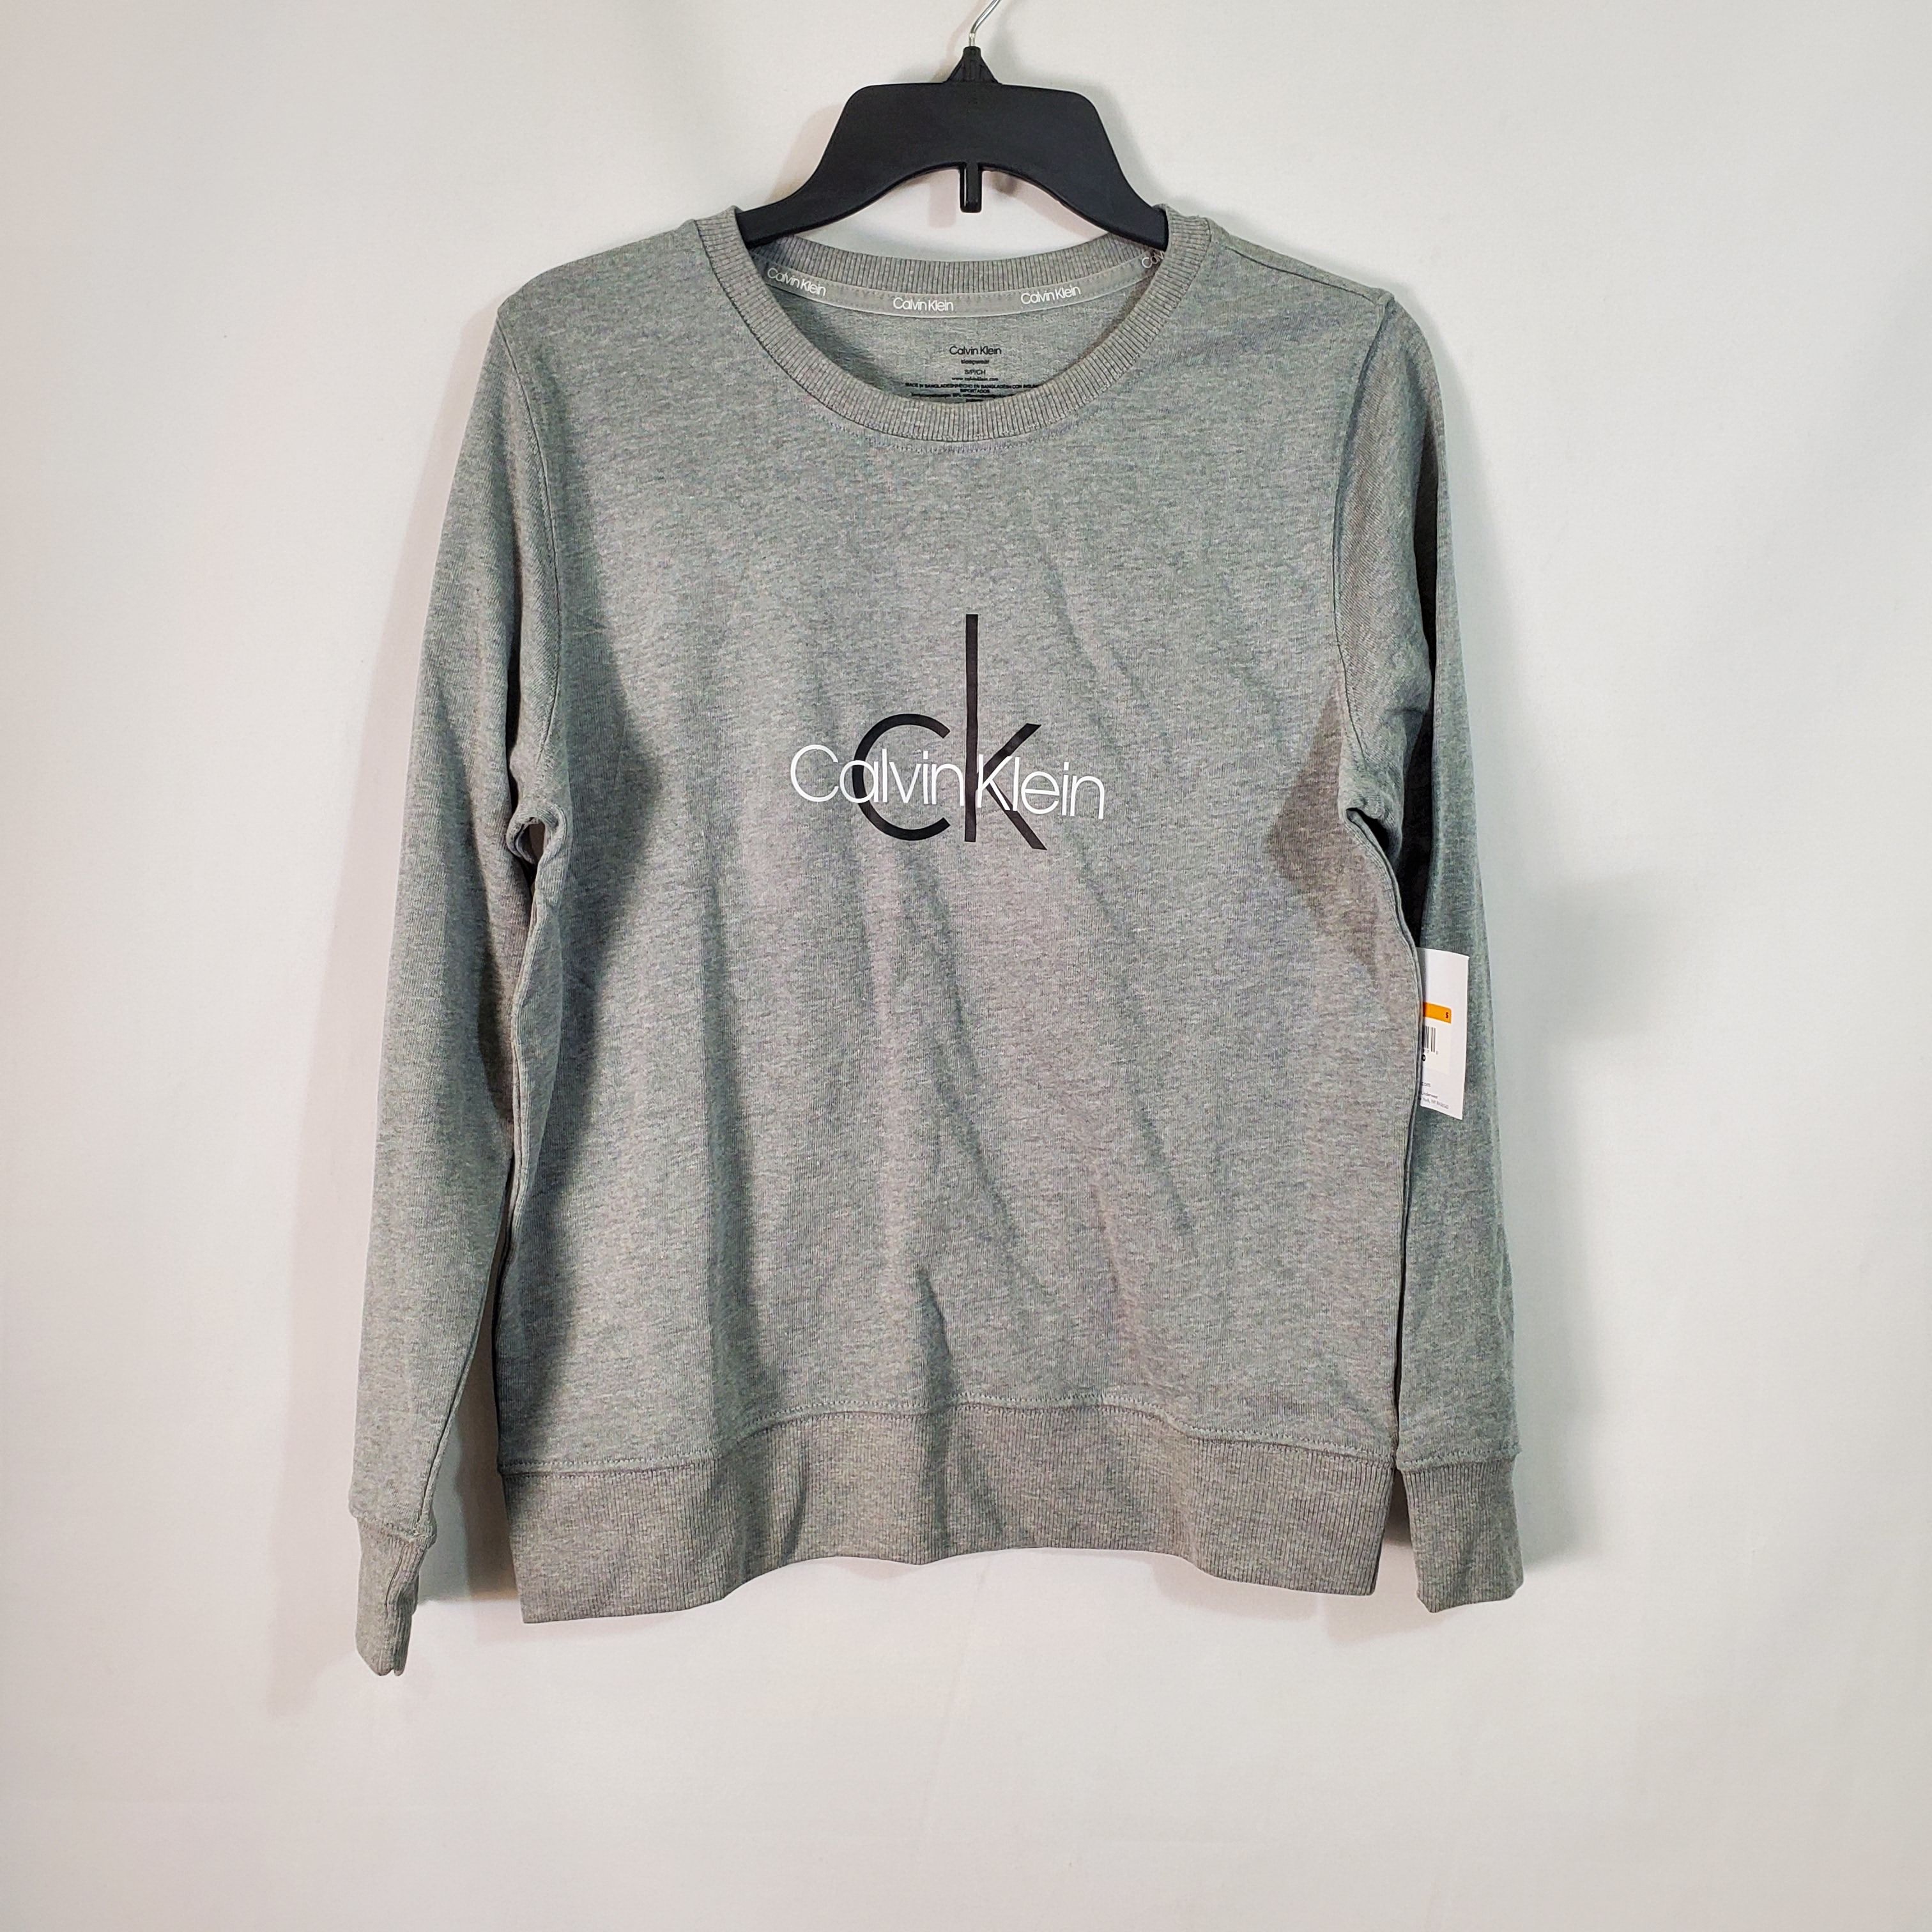 Buy the Calvin Klein Women NWT Sweater GoodwillFinds | Sleepwear S Grey